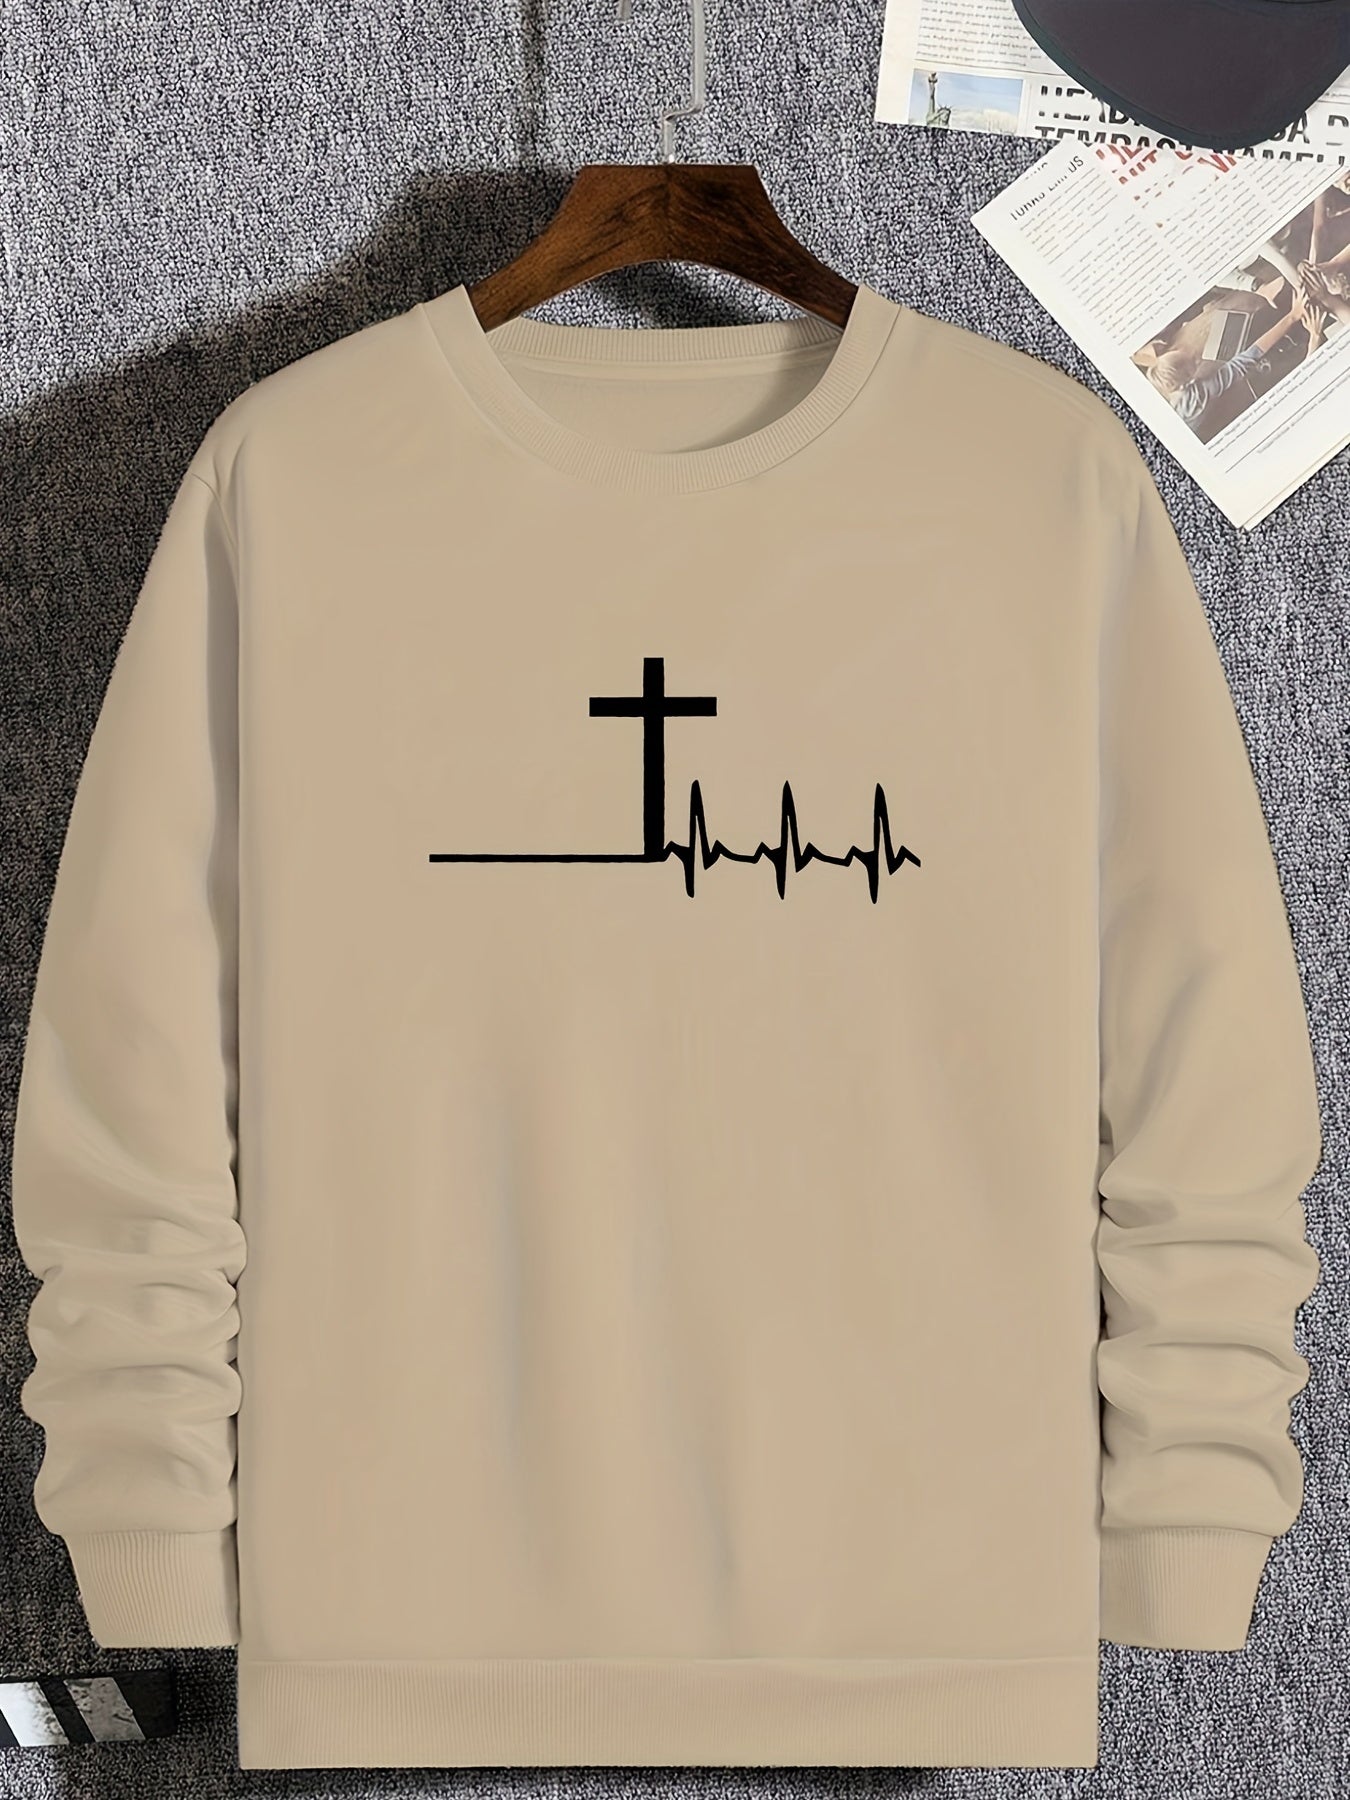 The Cross Is My Lifeline Plus Size Men's Christian Pullover Sweatshirt claimedbygoddesigns